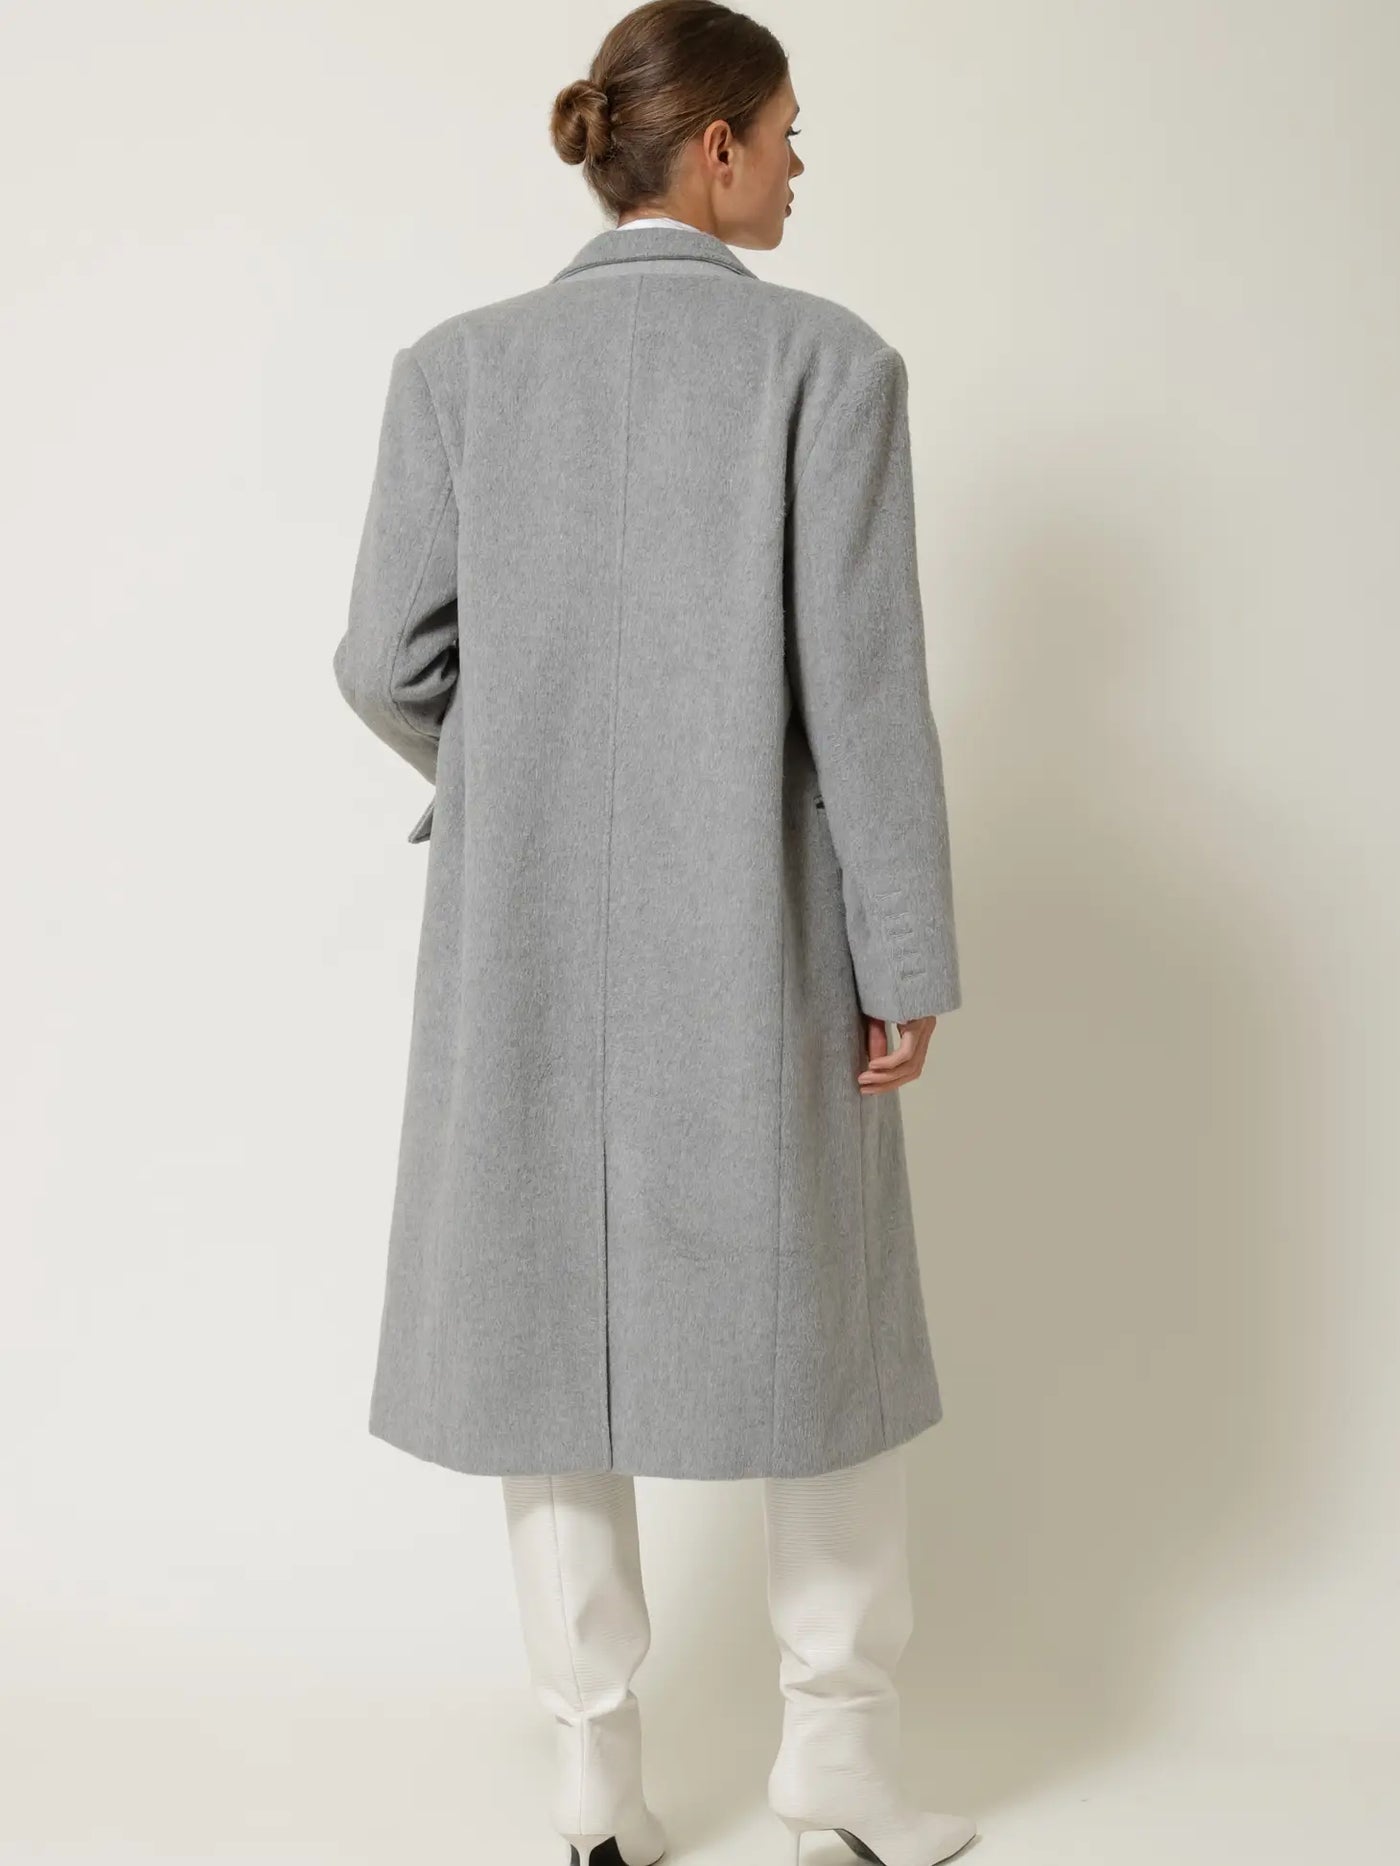 grey-long-line-oversize-coat-the-shameless-collection